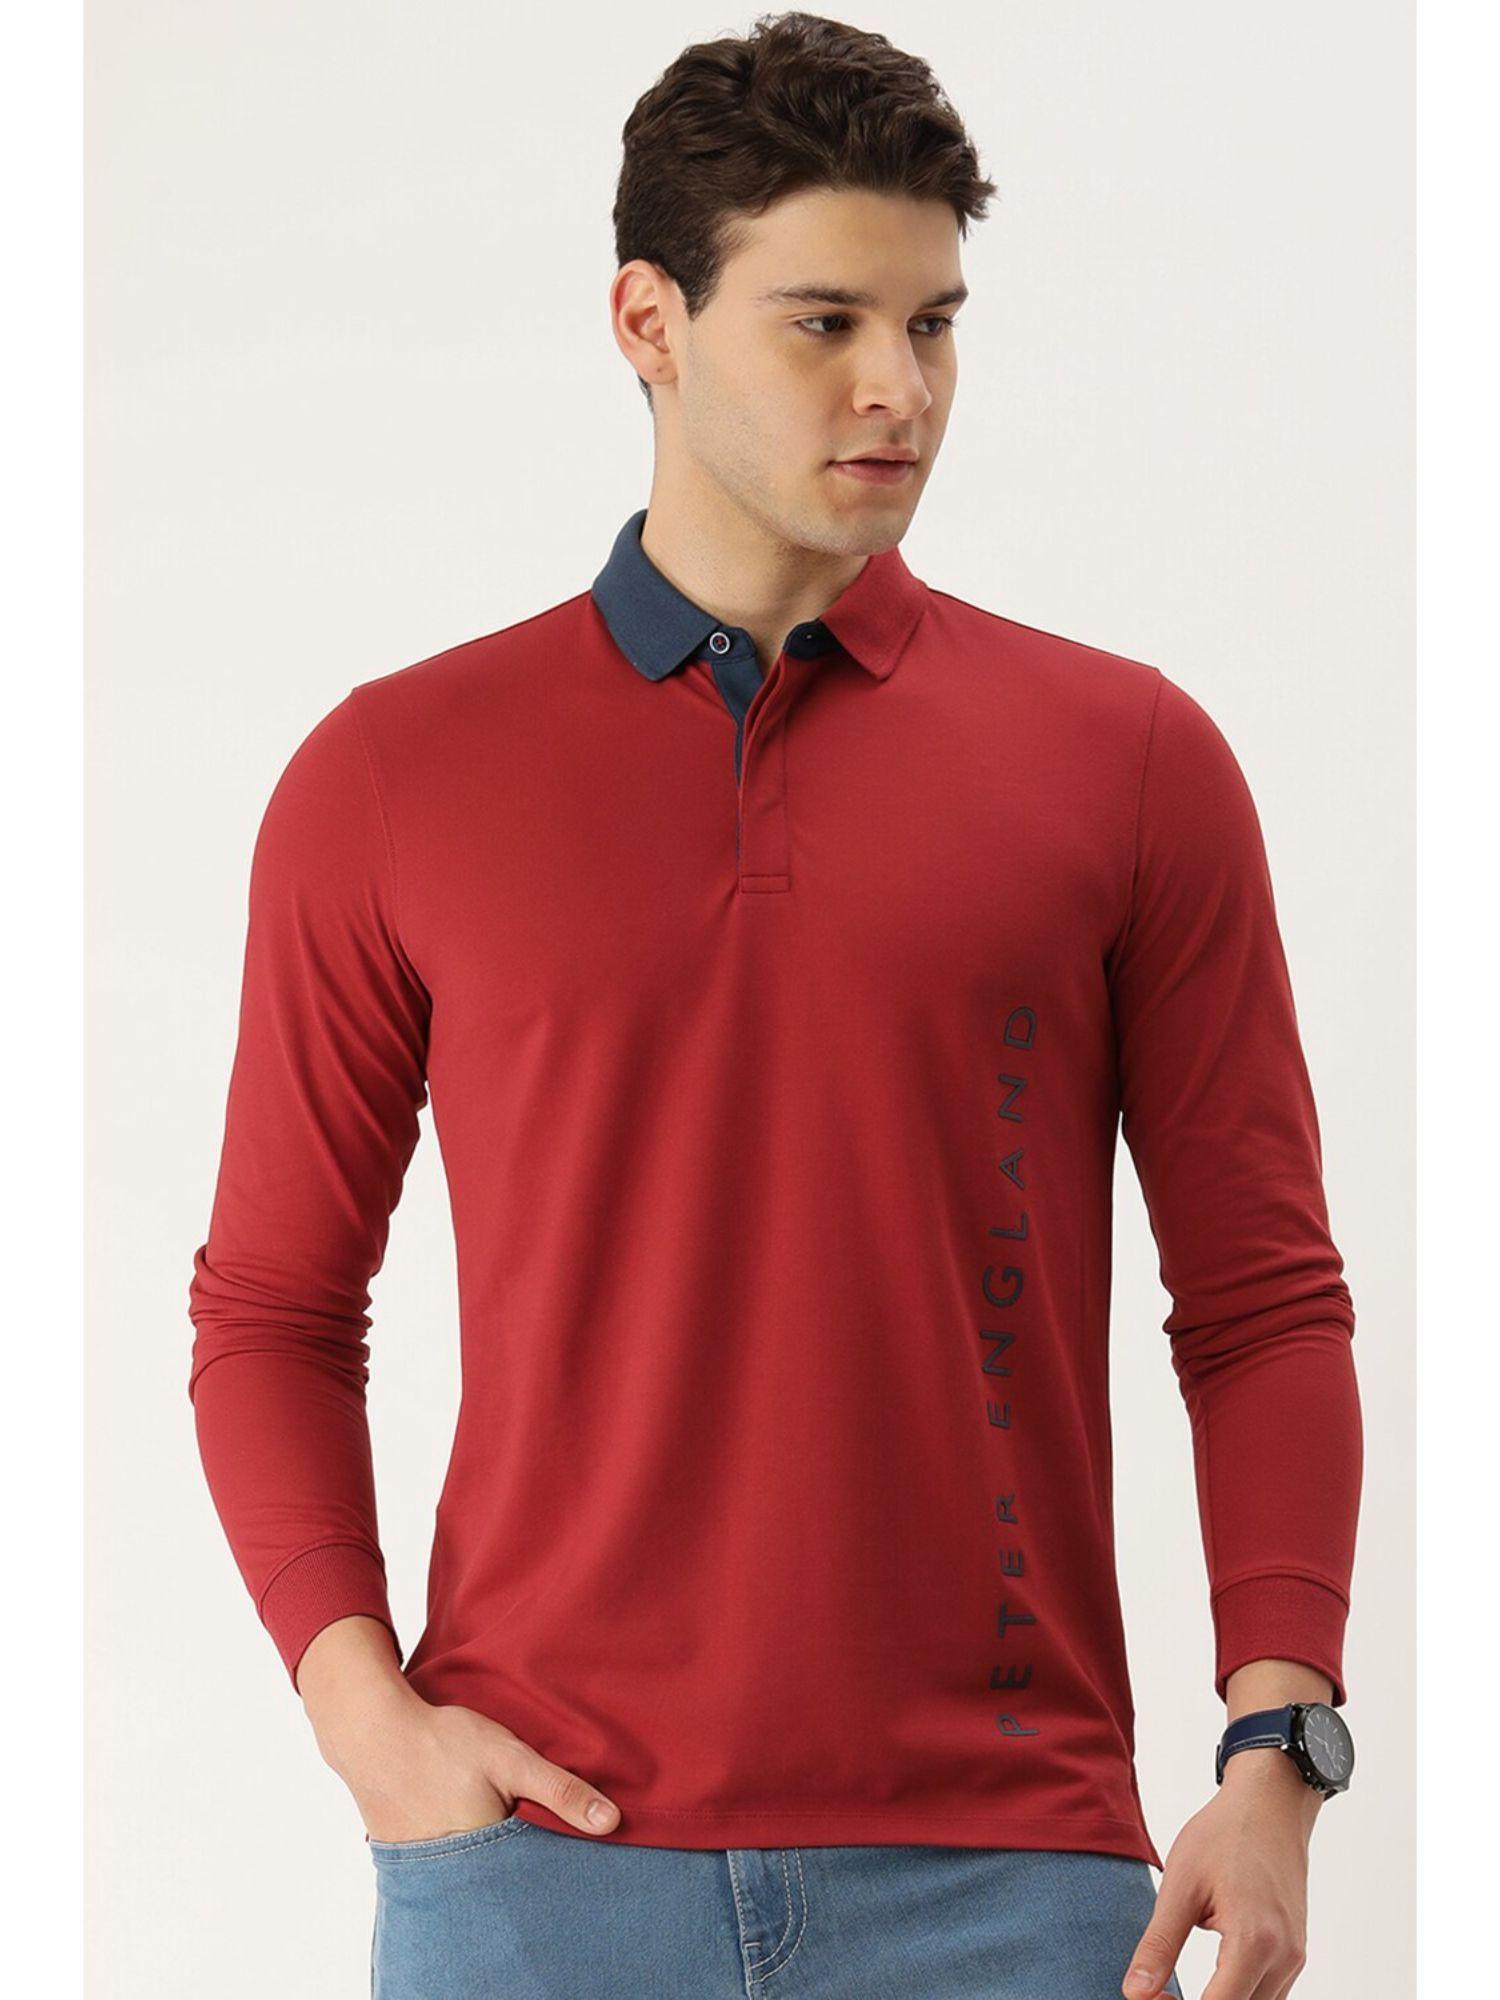 men-graphic-regular-full-sleeves-collar-neck-red-polo-t-shirt